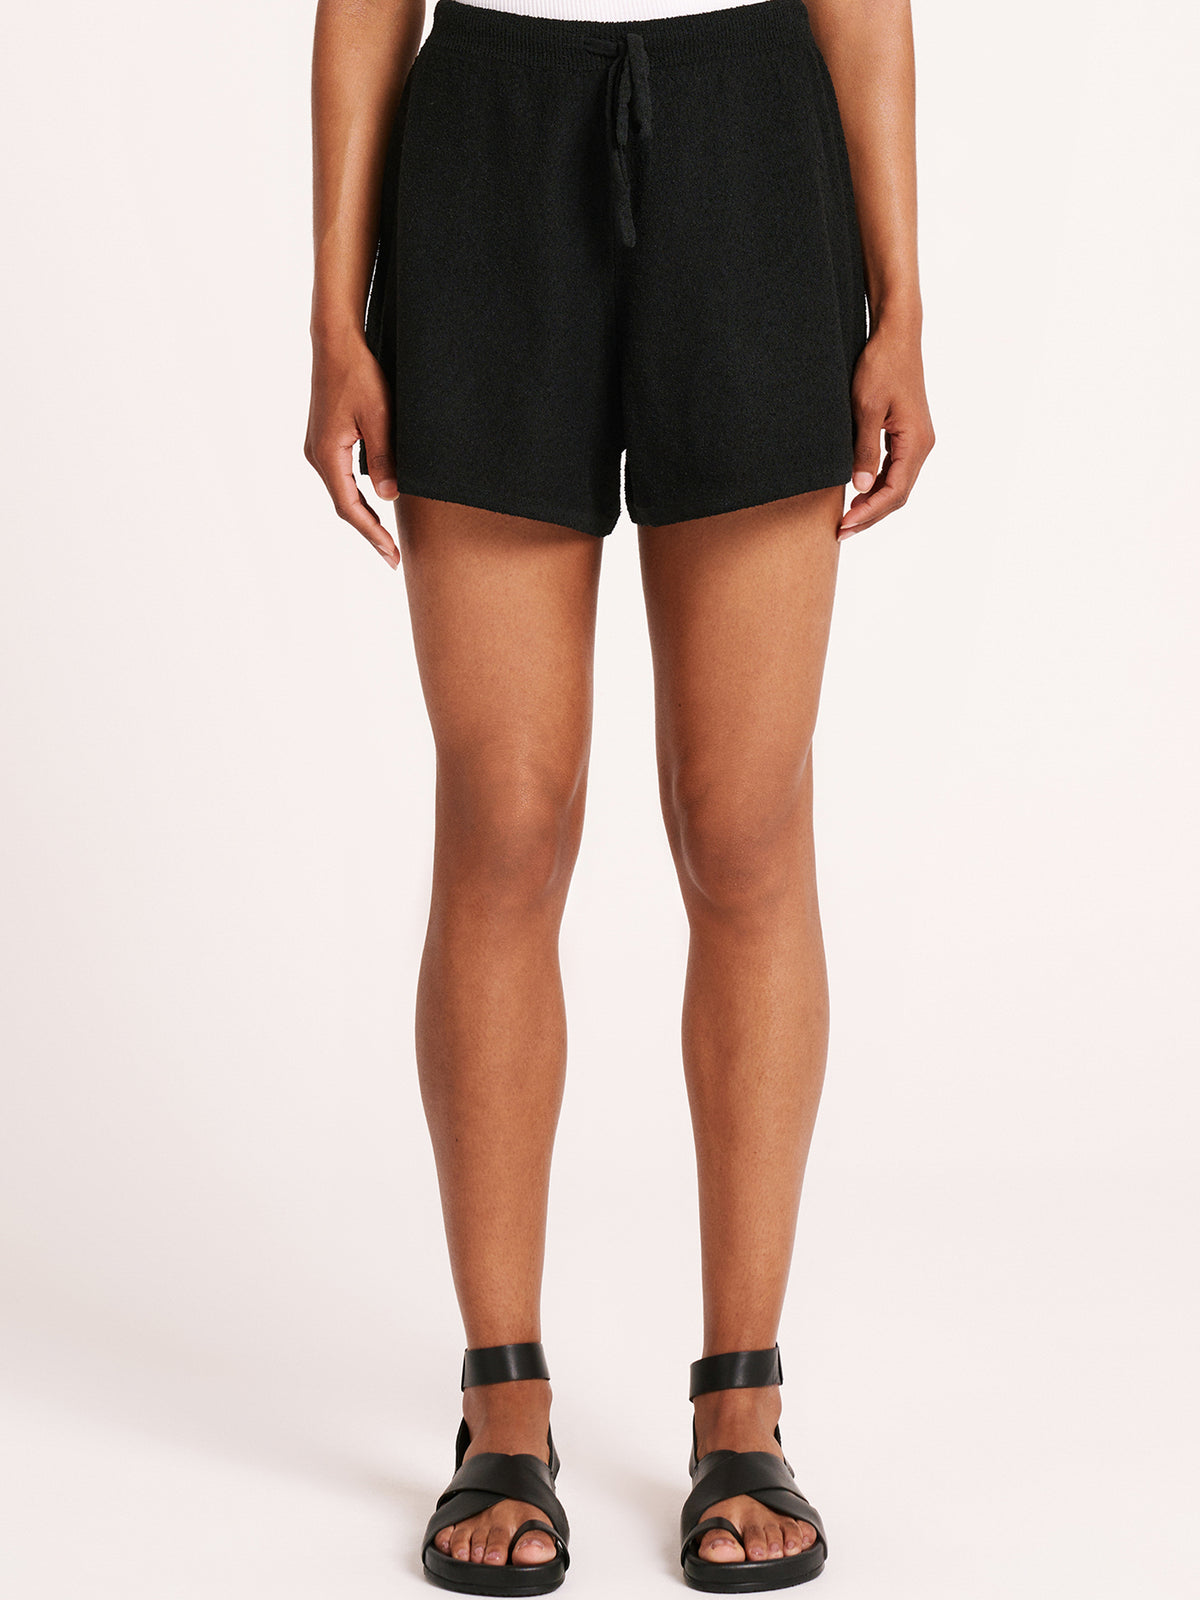 Zosia Knit Shorts in Black